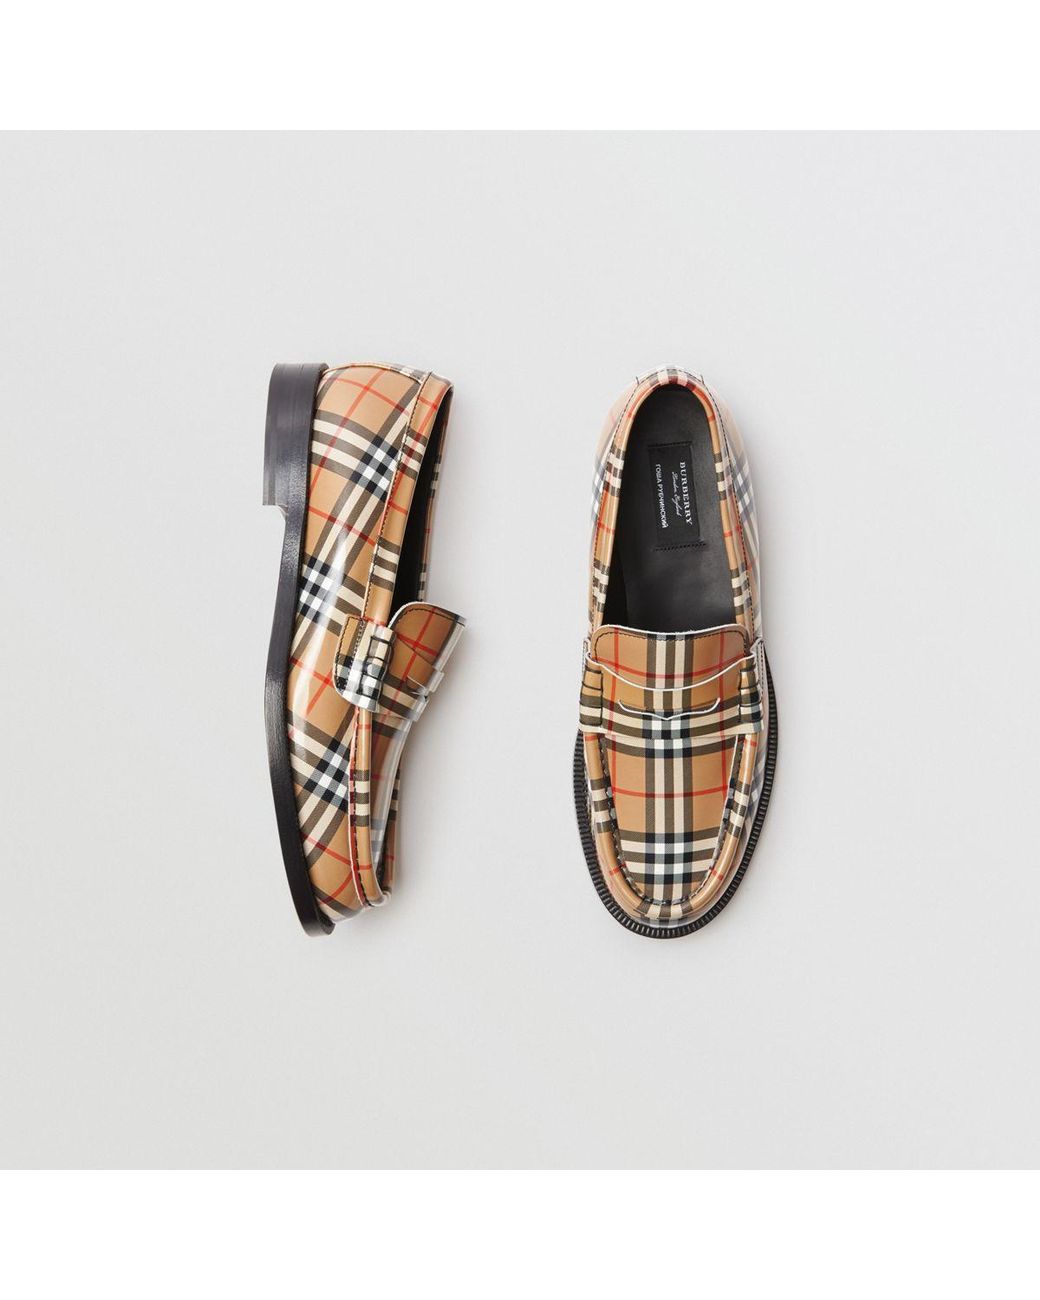 genezen Bestuiven Ongehoorzaamheid Burberry Gosha X Check Leather Loafers for Men | Lyst